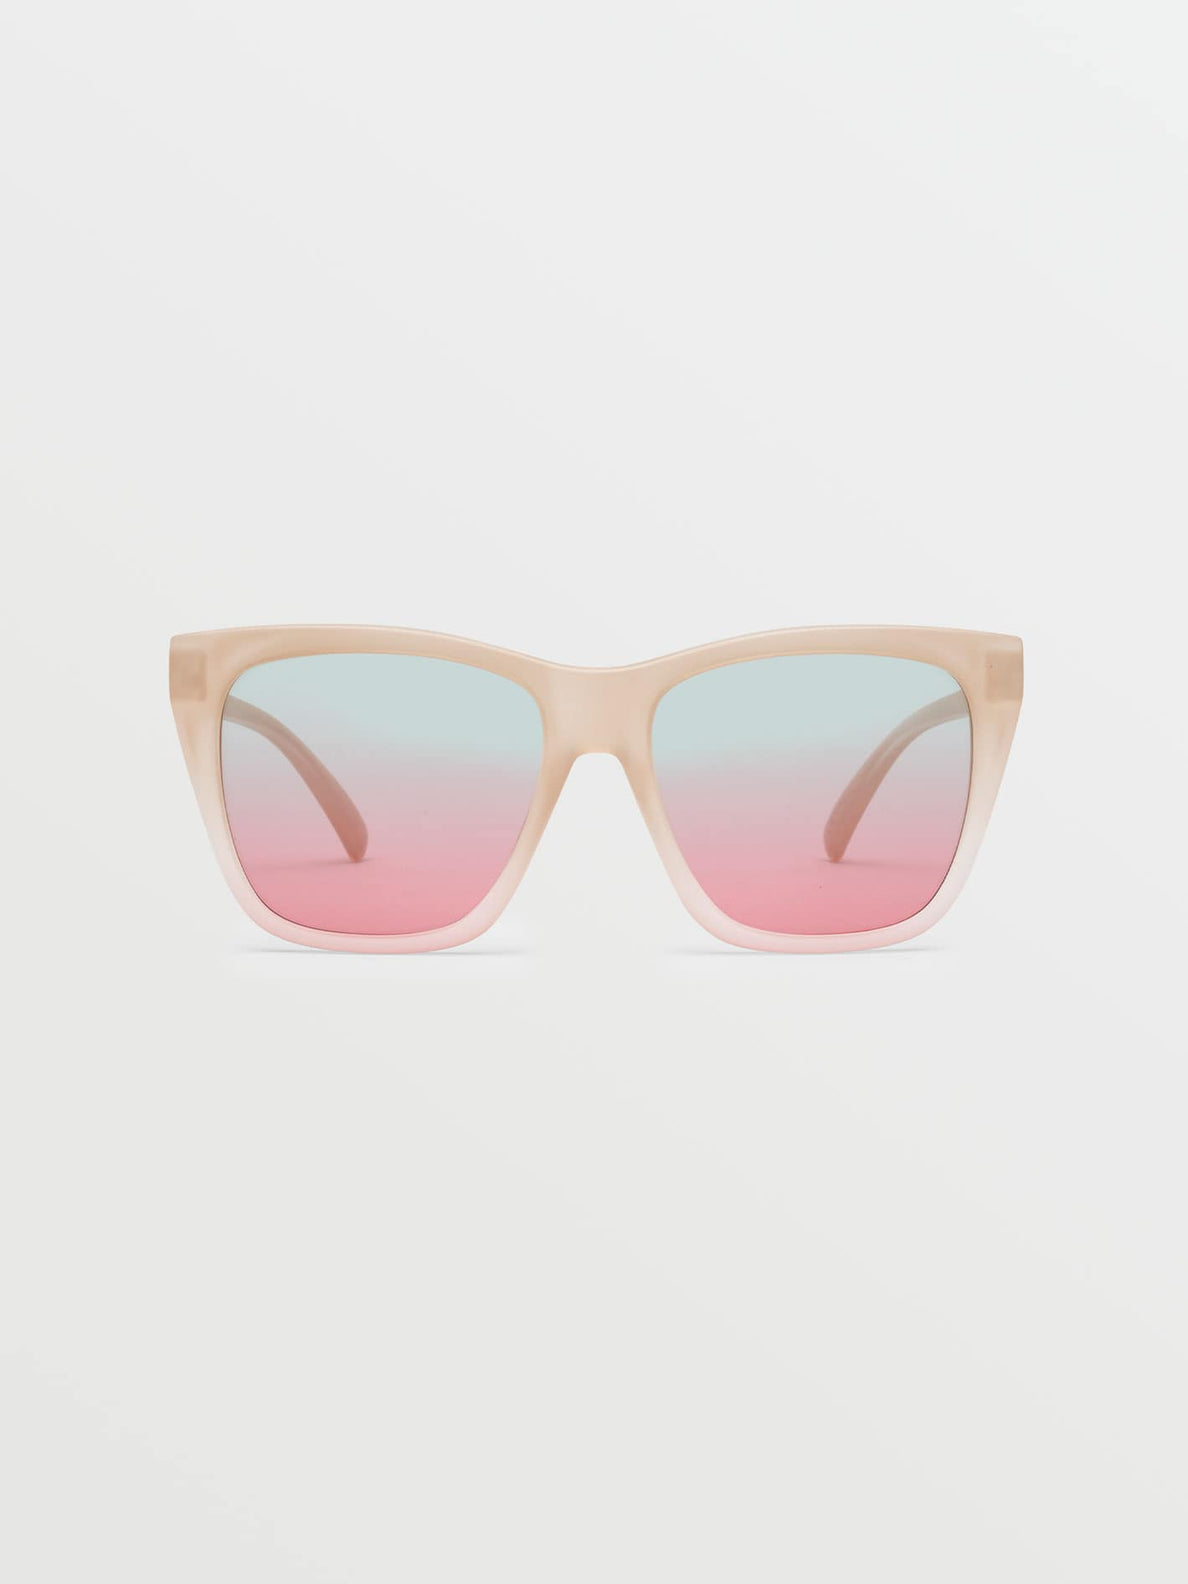 Looky Lou Sunglasses - So Faded/Aqua Gradient